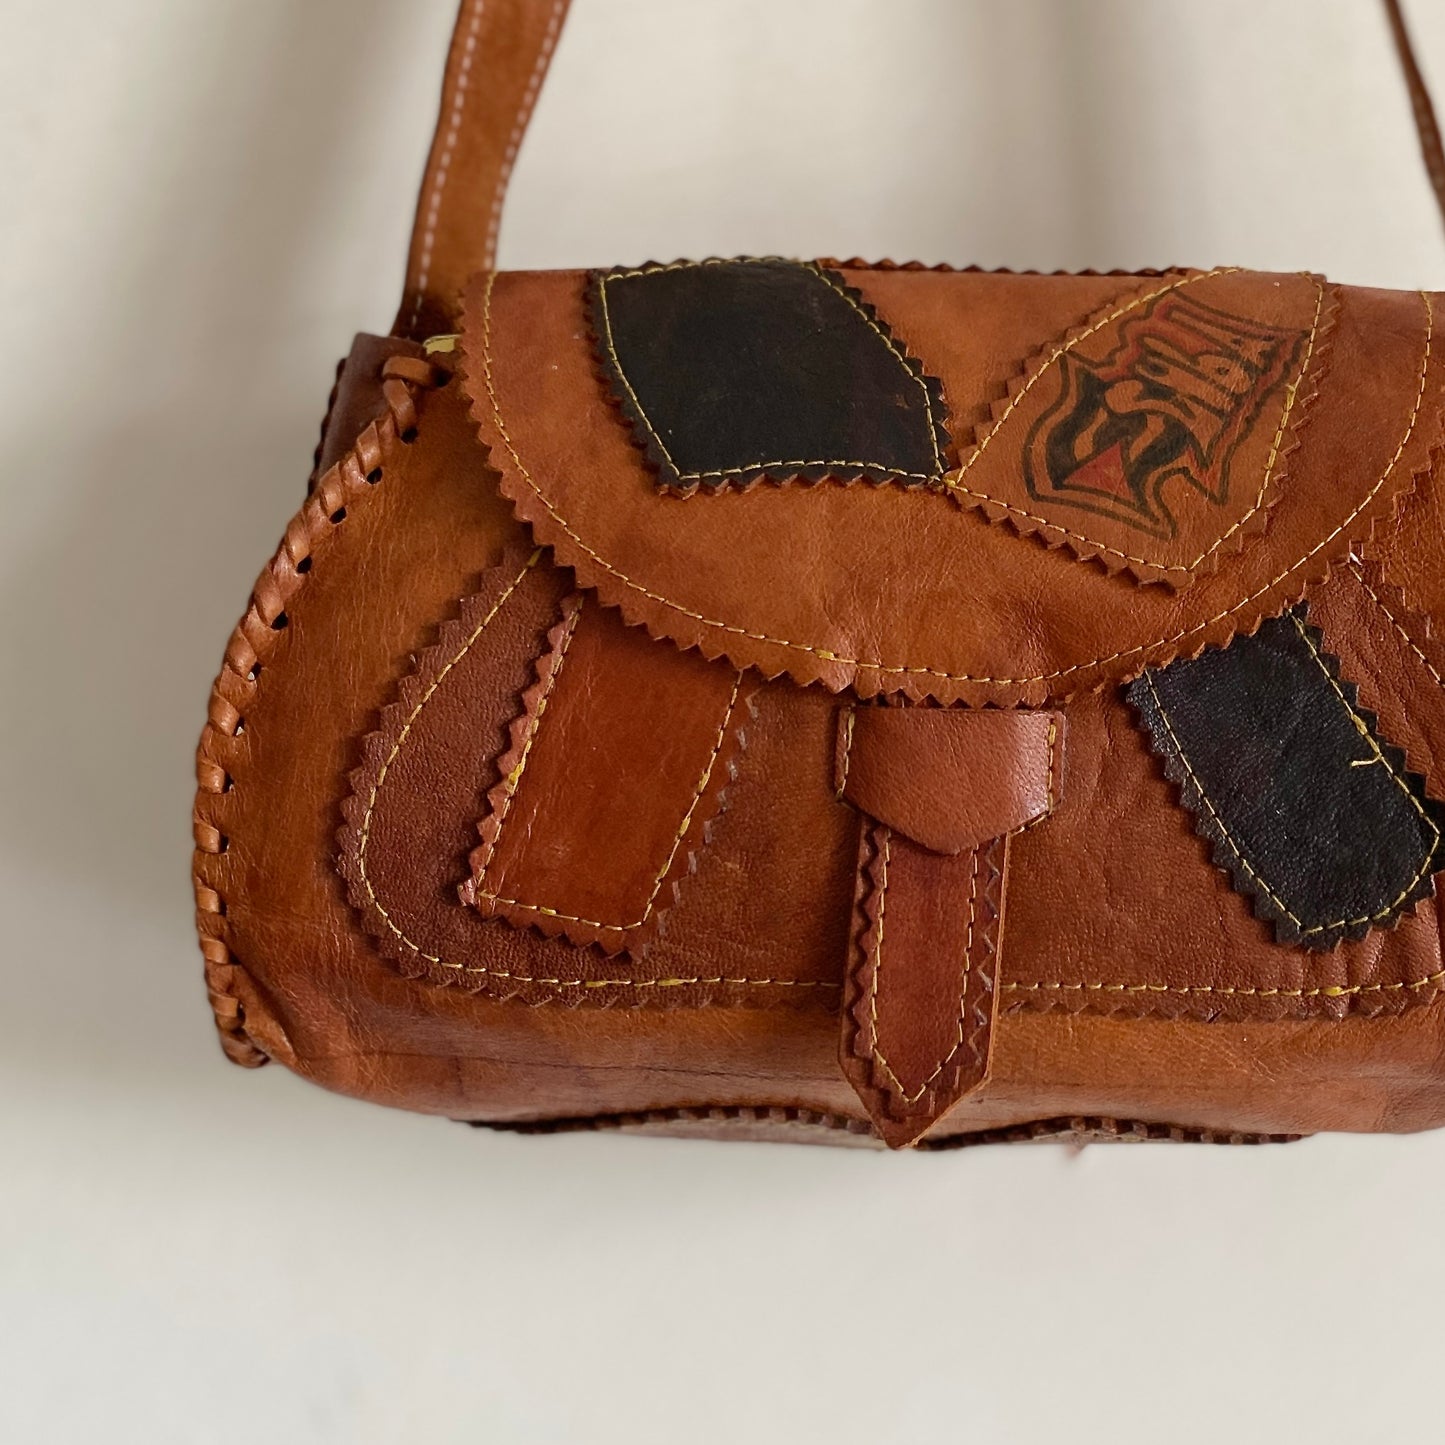 Small Tan Leather Bag